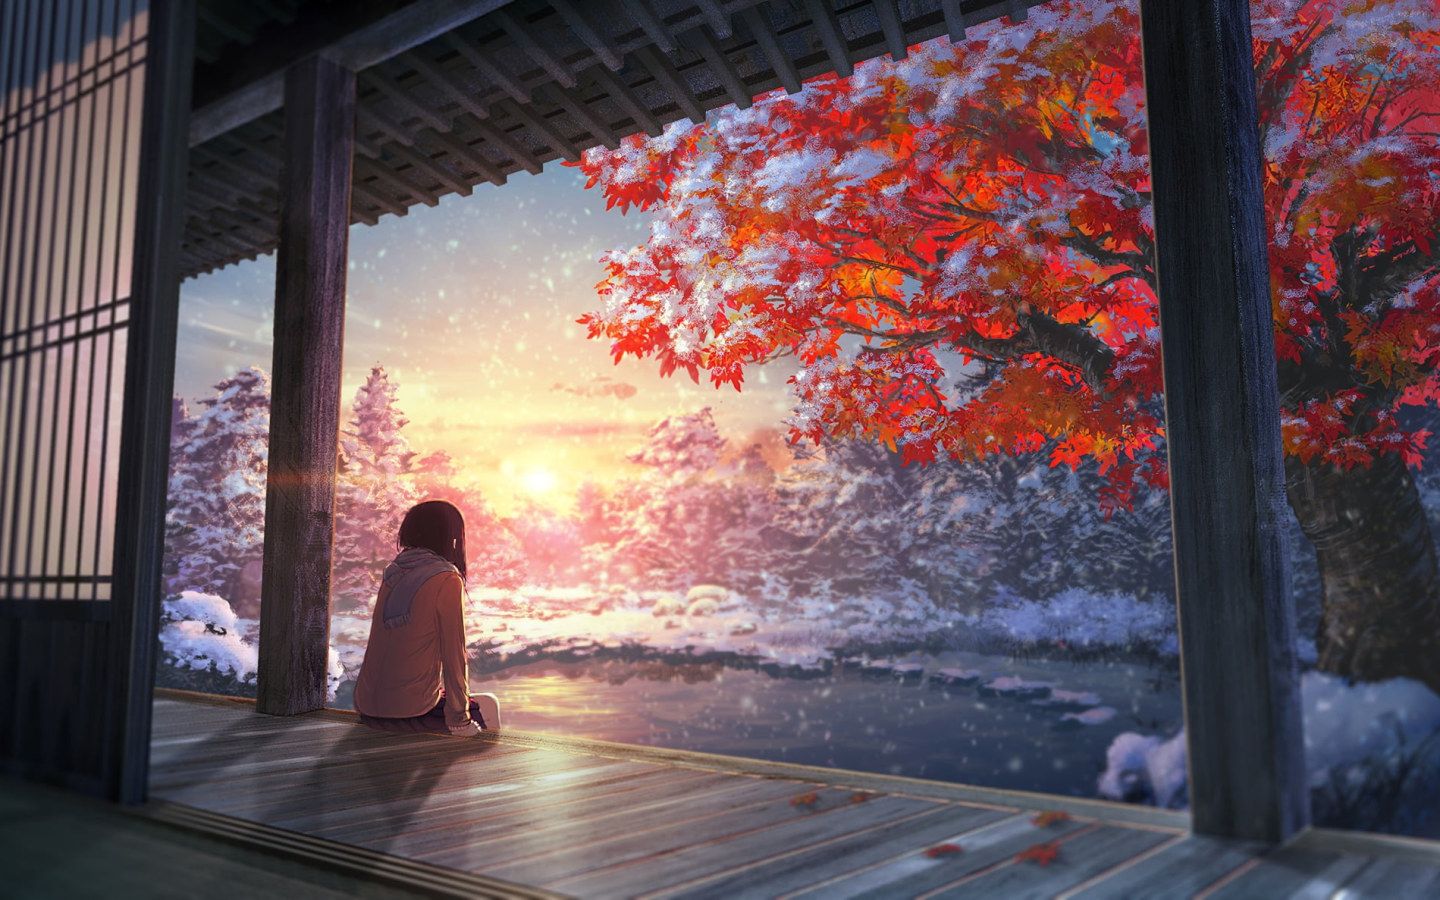 Anime wallpaper, anime girls, artwork, tree, one person, rear view, nature • Wallpaper For You HD Wallpaper For Desktop & Mobile